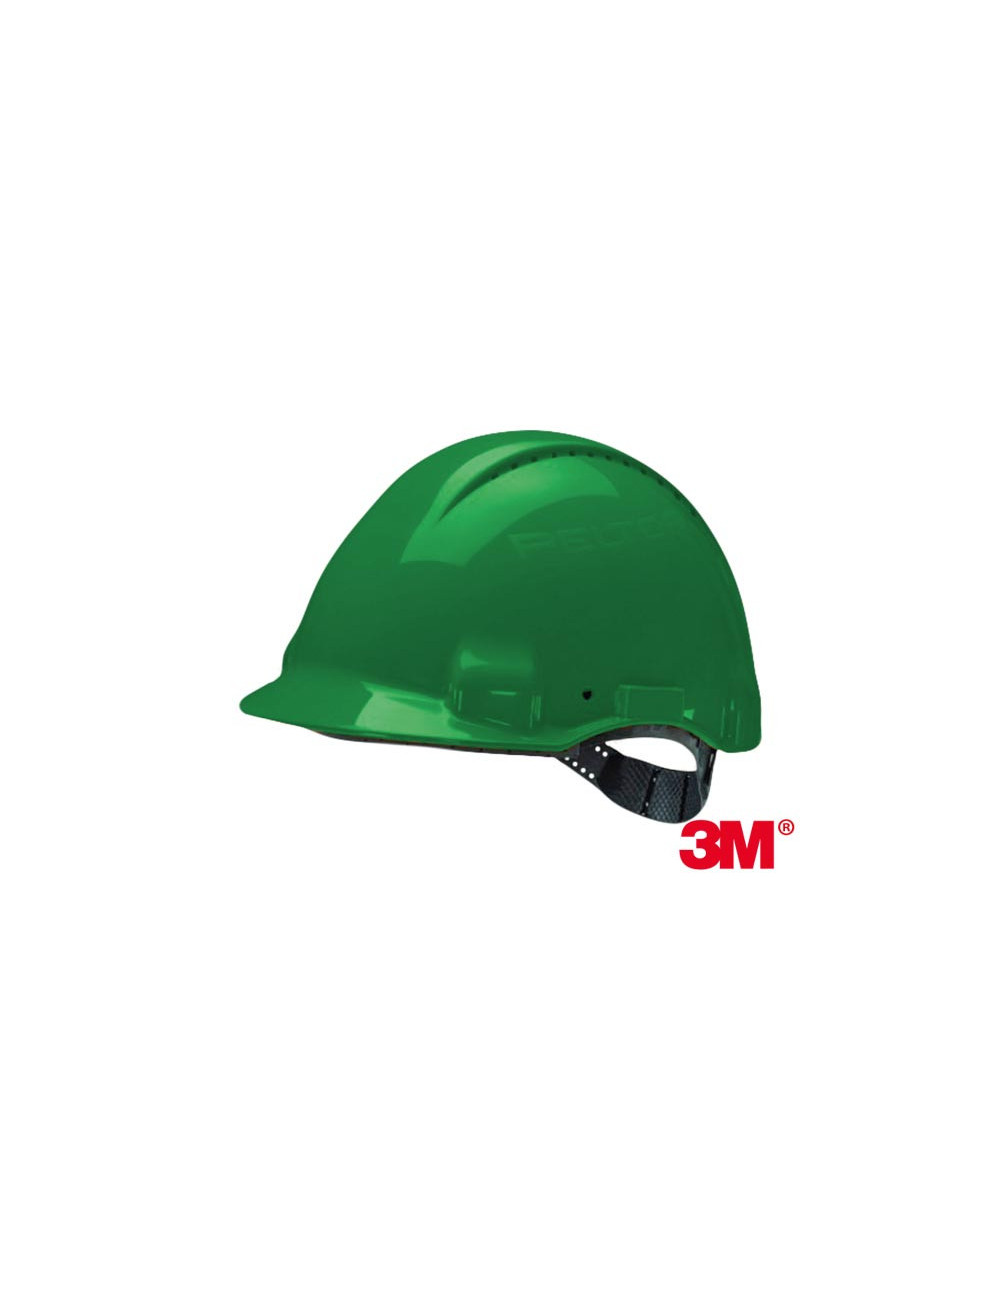 Safety helmet with green 3M 3m-kas-solaris